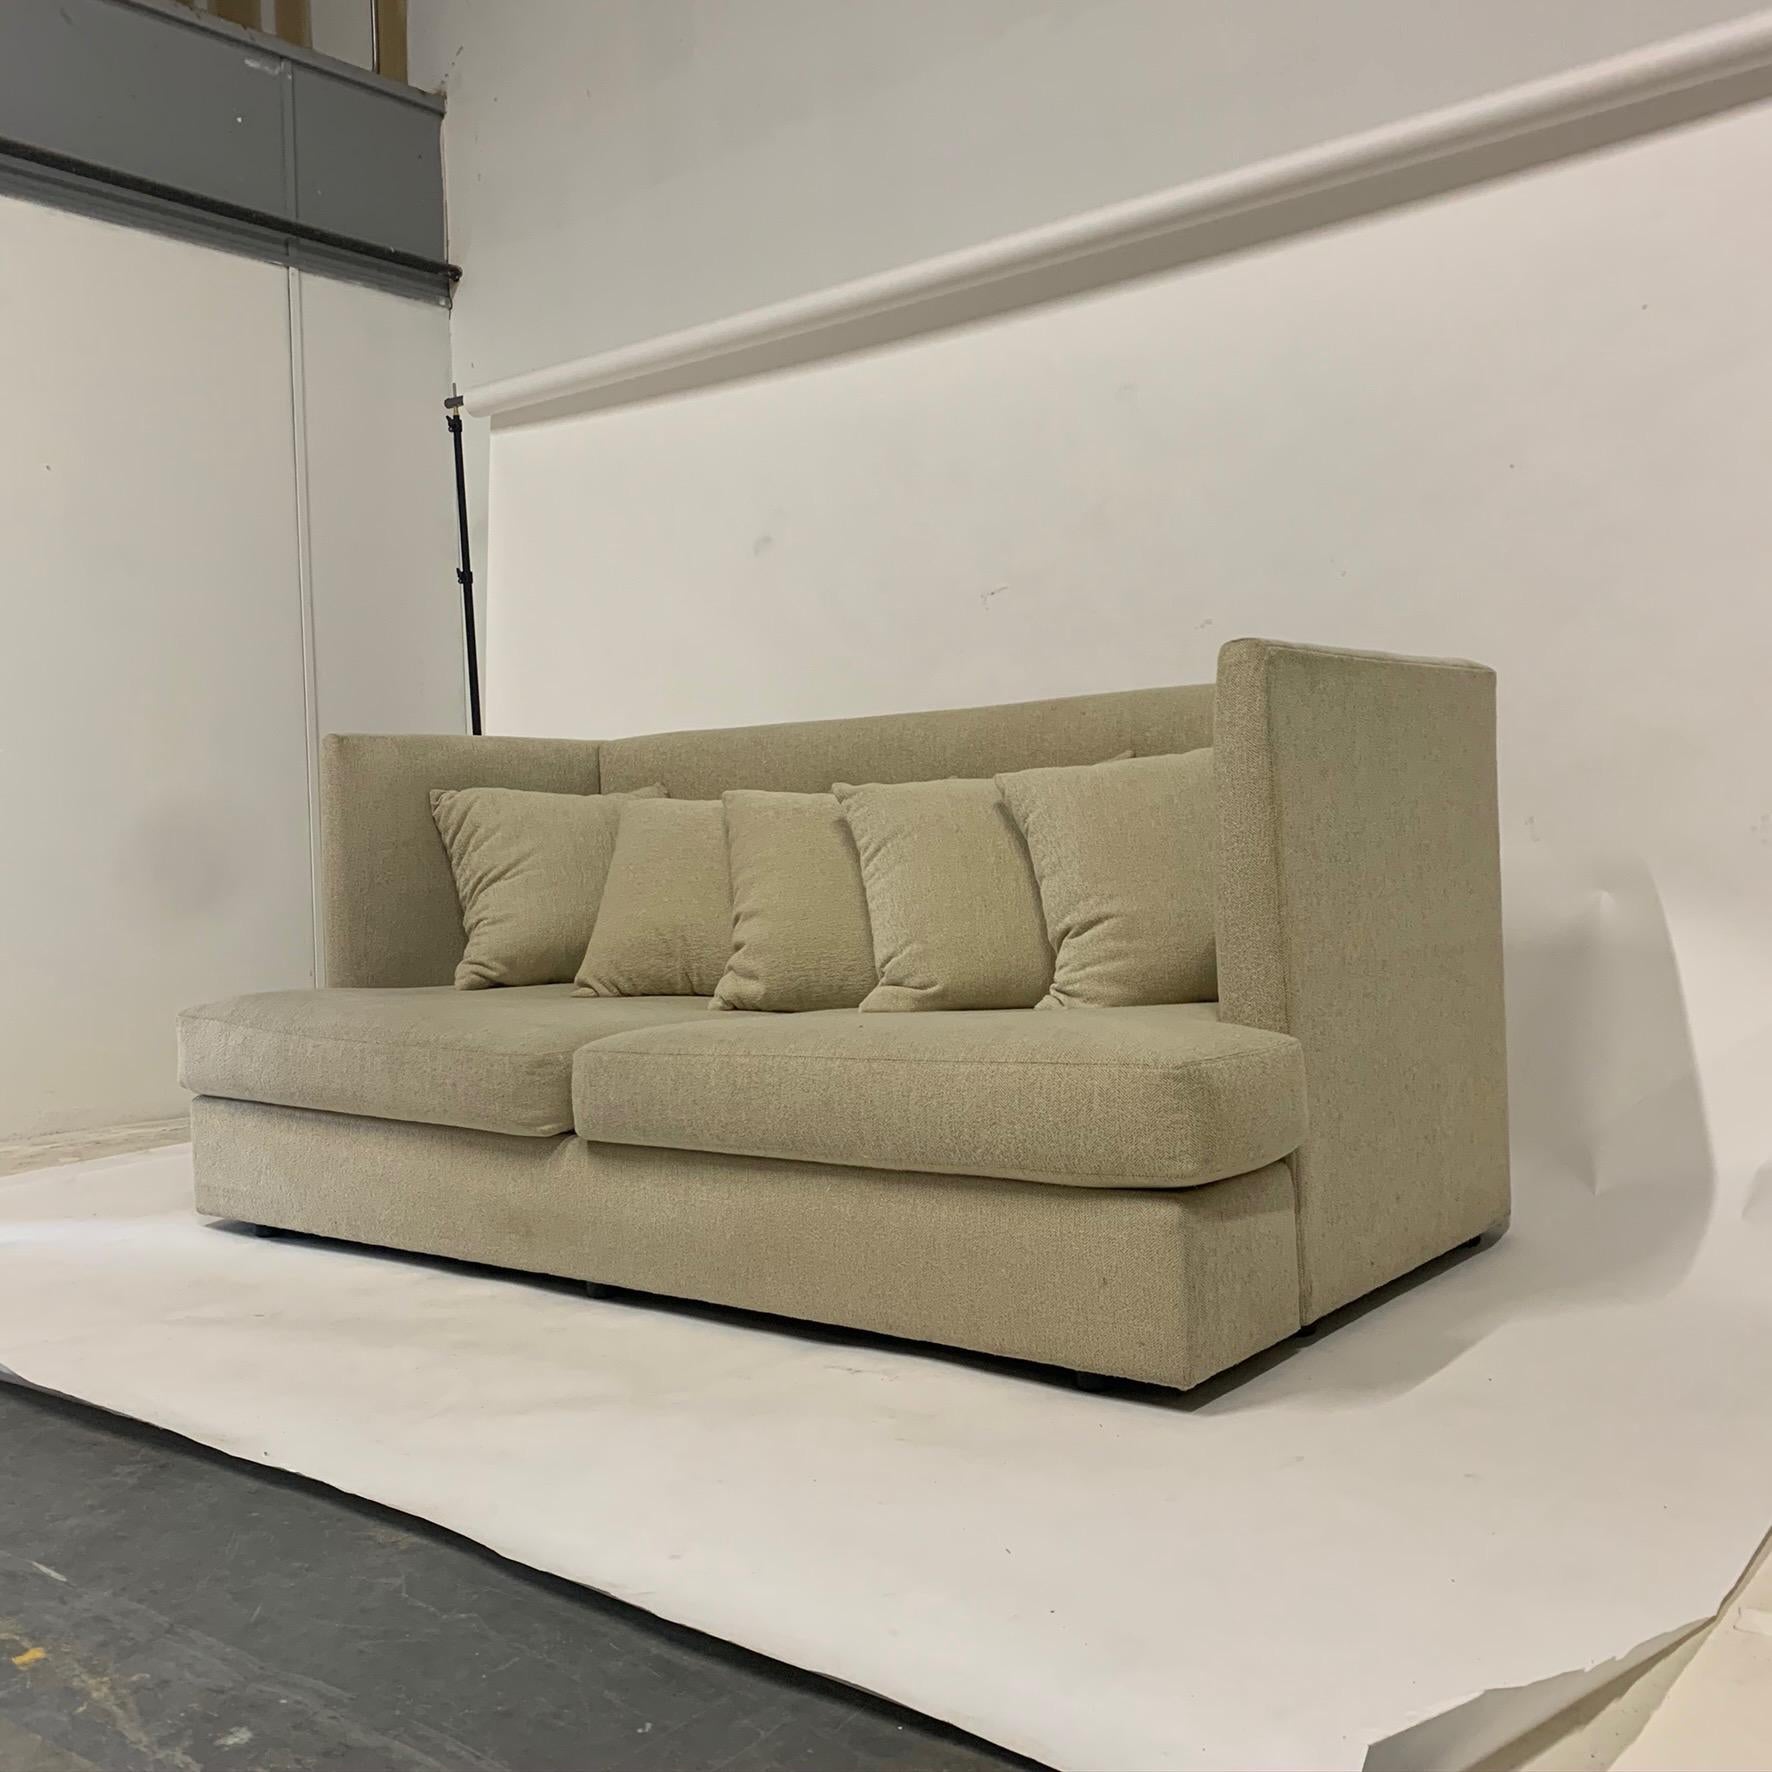 Stunning Milo Baughman Shelter Sofa w Down Pillows- Very Comfortable 1